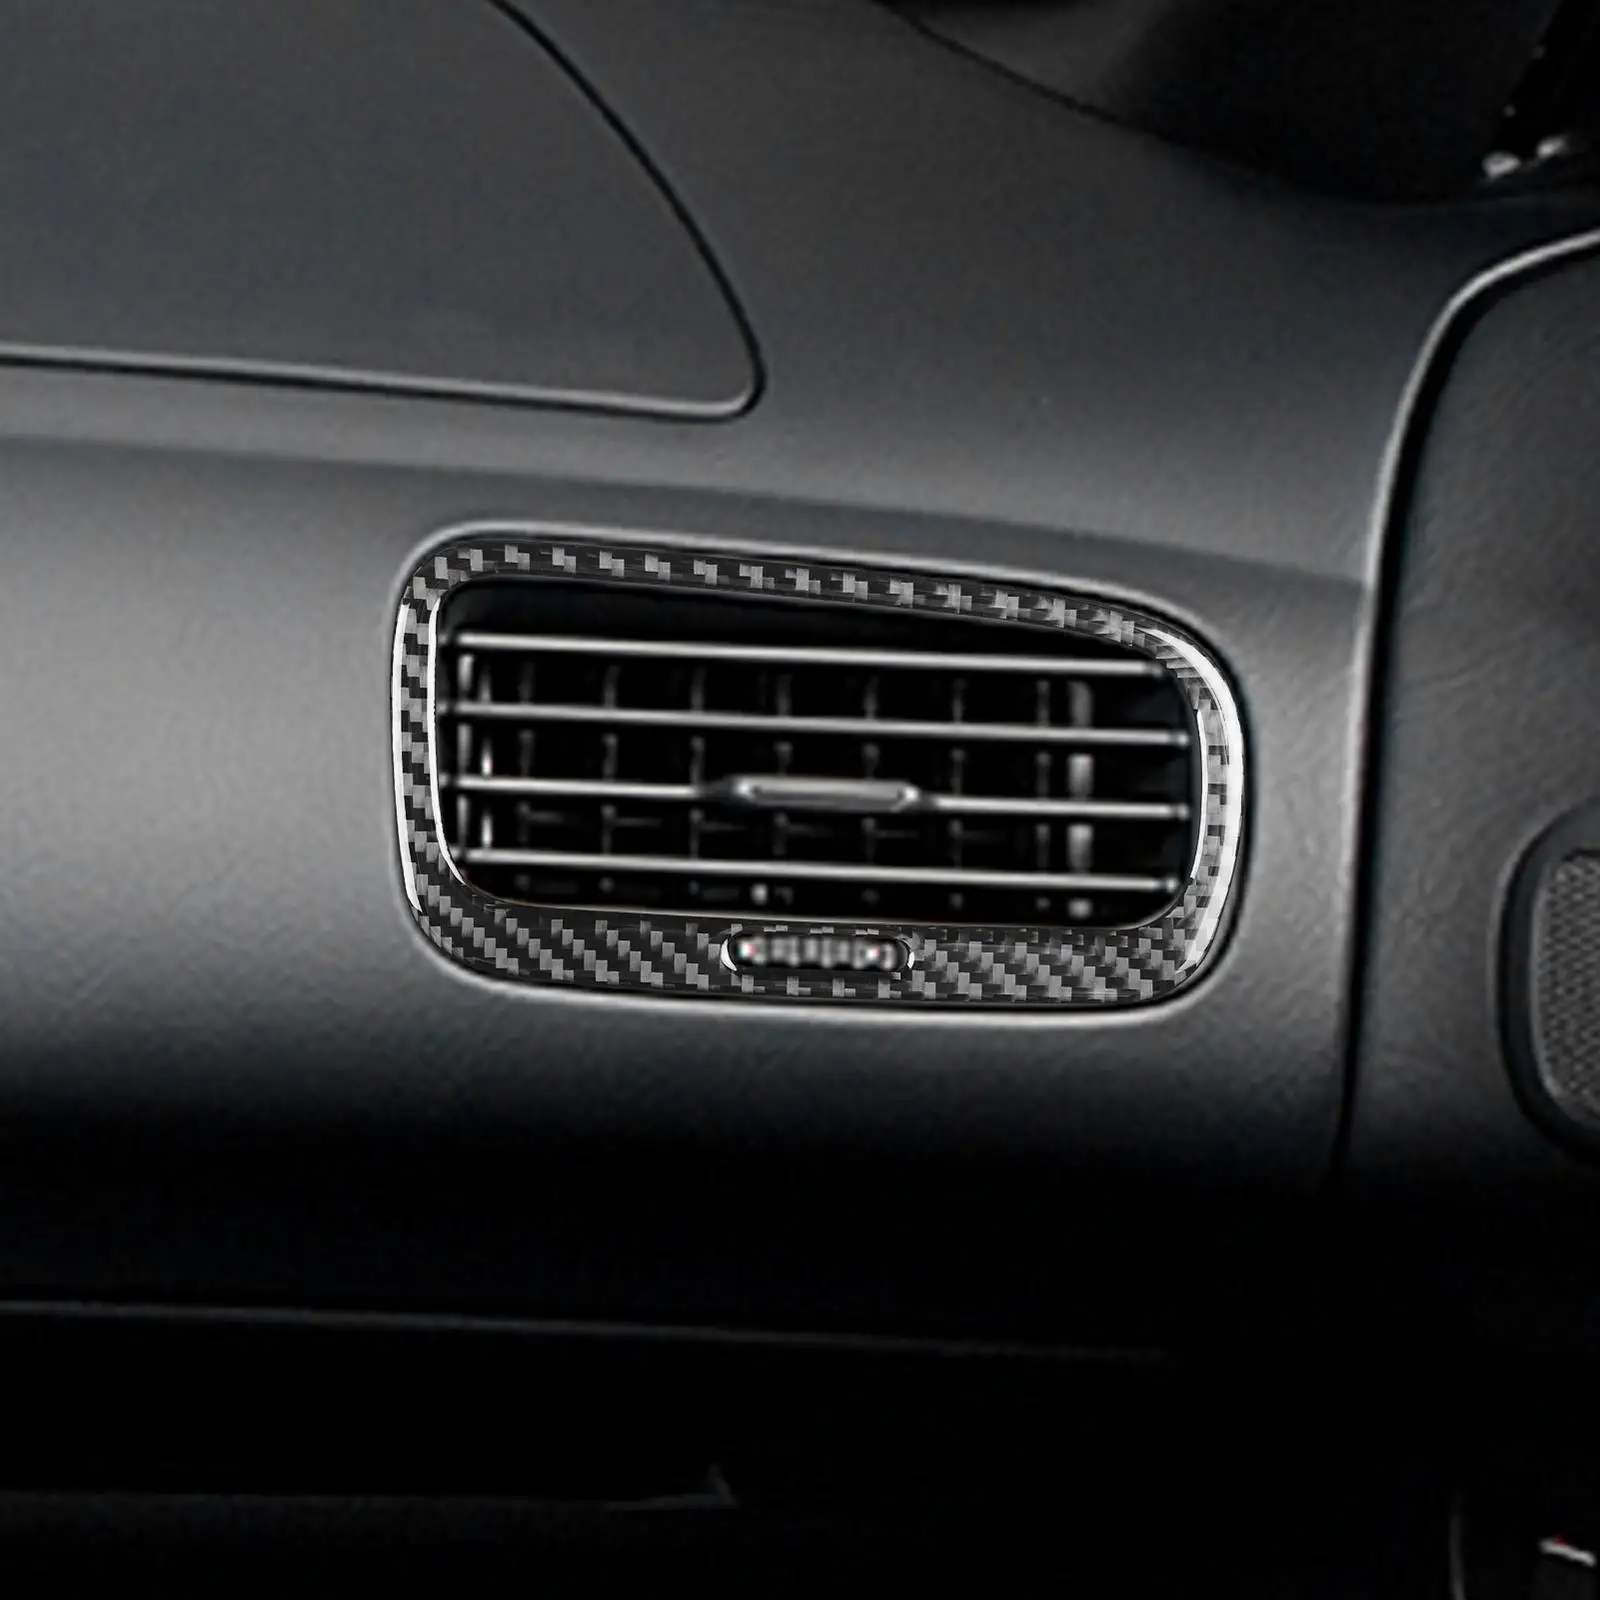 Passenger Air Vent Cover Trim Carbon Fiber Car Interior Accessories for Honda S2000 High Performance Premium Professional